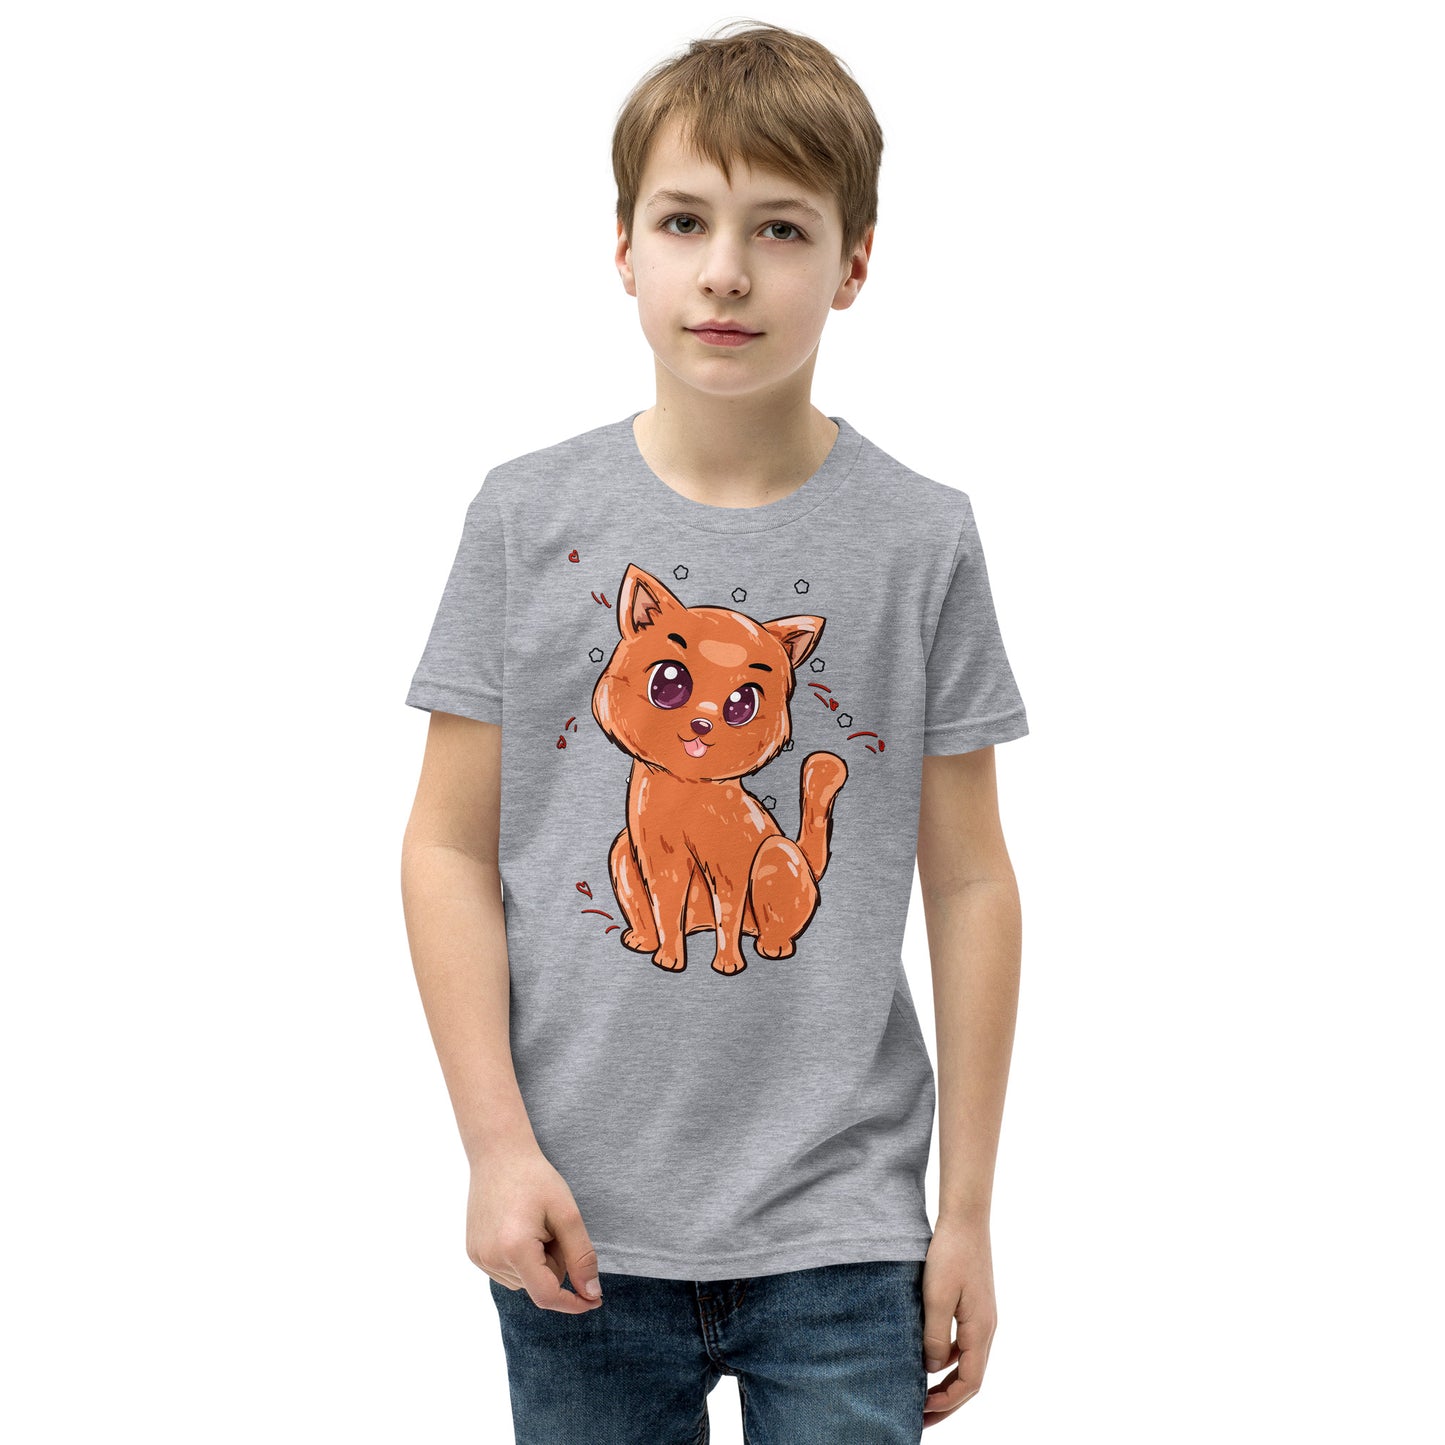 Cute Cat T-shirt, No. 0176